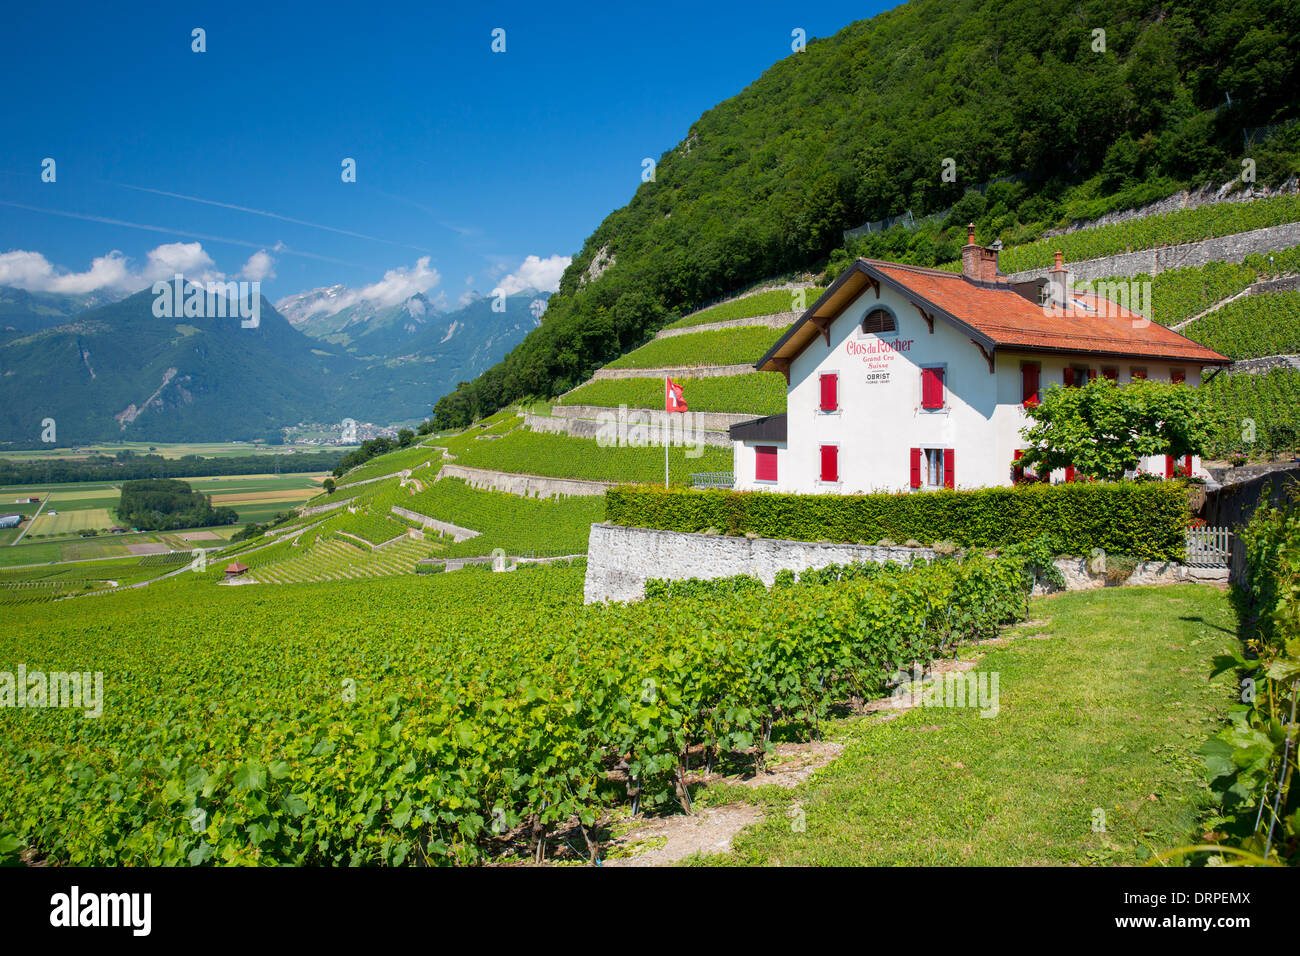 Chablais vines at wine estate, Clos du Rocher, at Yvorne in the Chablais region of Switzerland Stock Photo